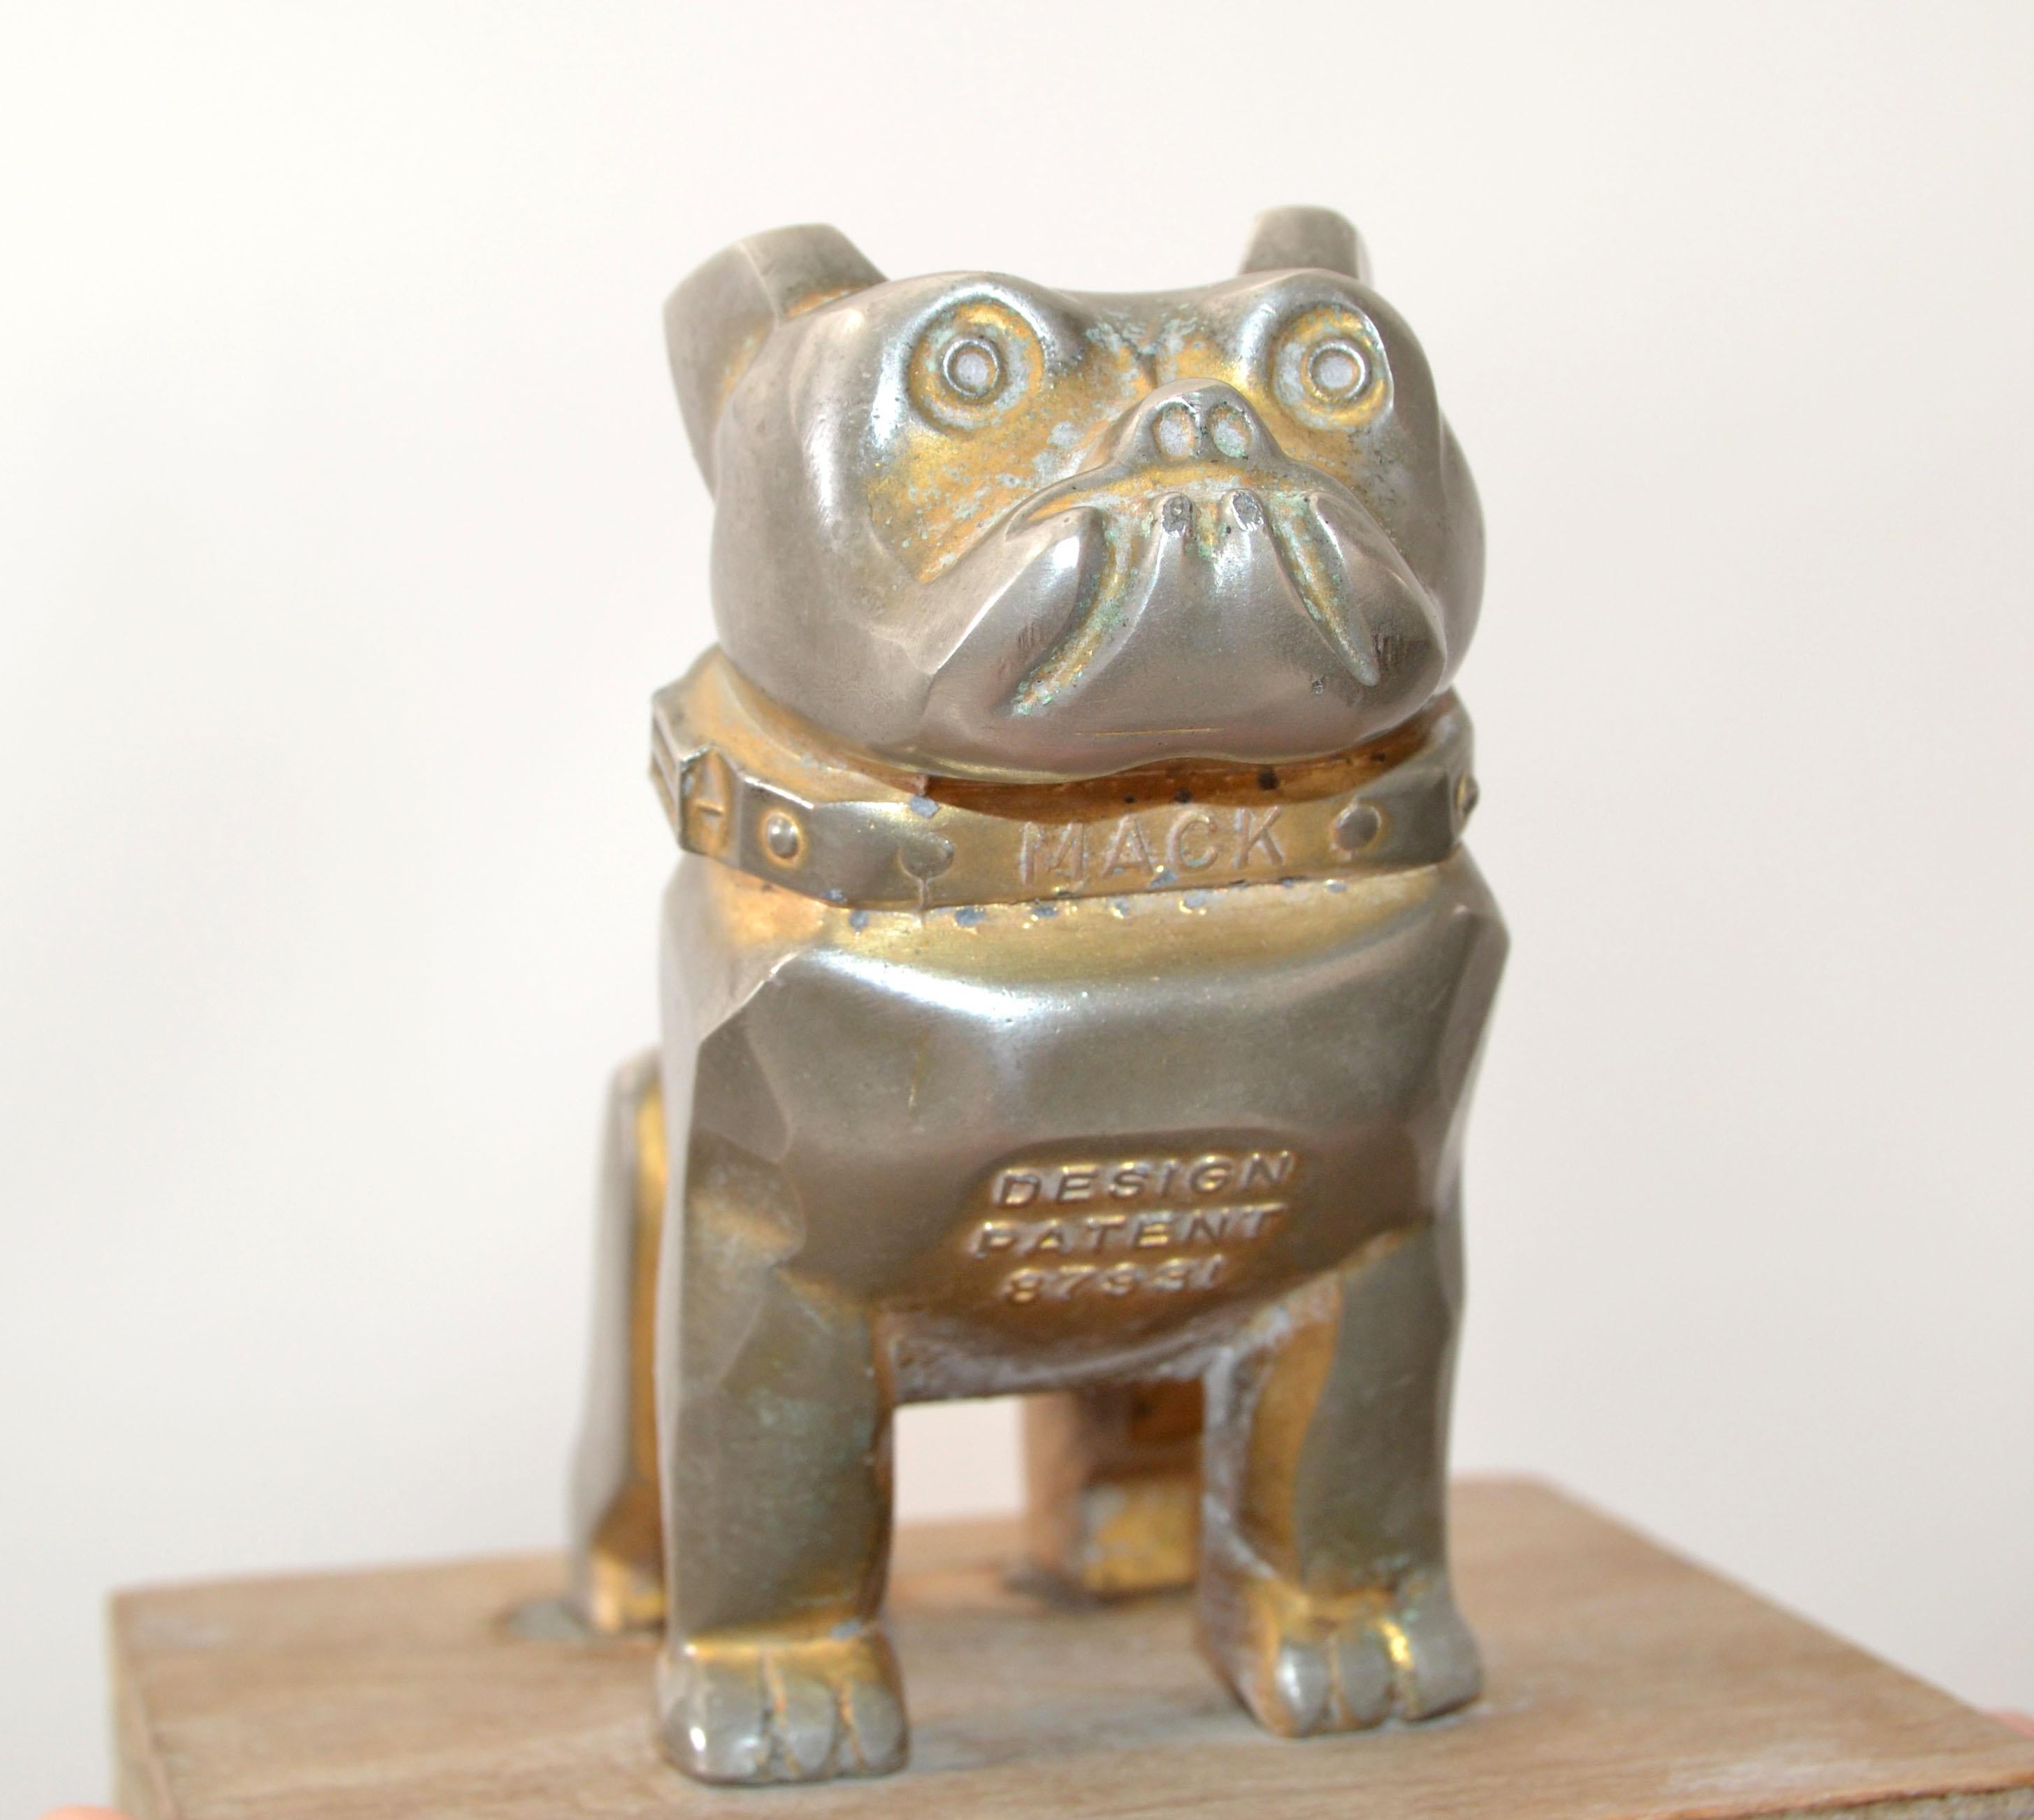 North American Vintage Design Patent Mack Trucks Bull Dog Figurine, Statue, Animal Sculpture For Sale